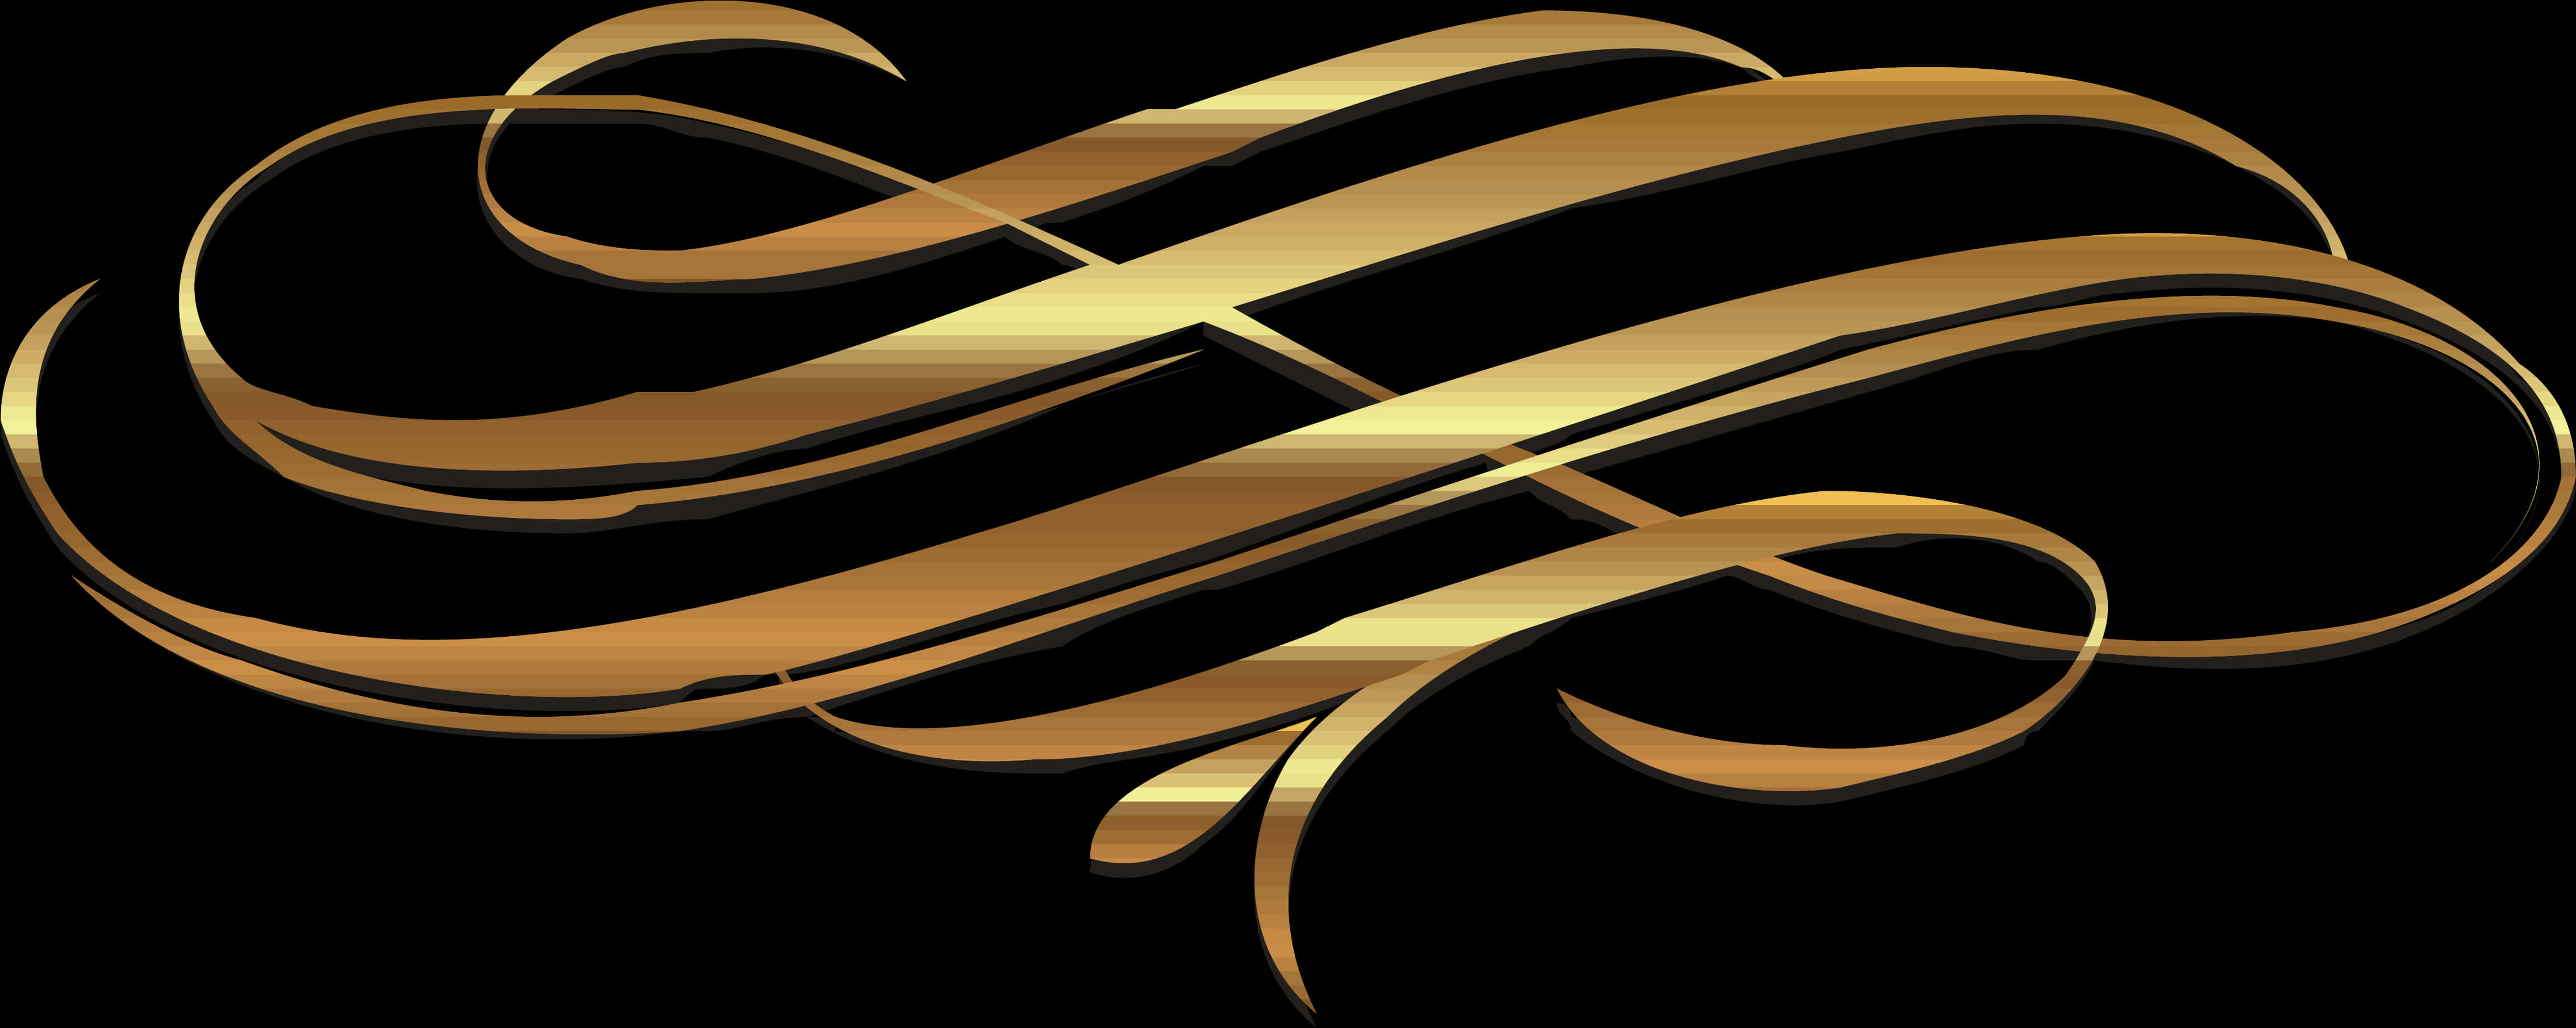 Elegant Golden Ribbon Graphic